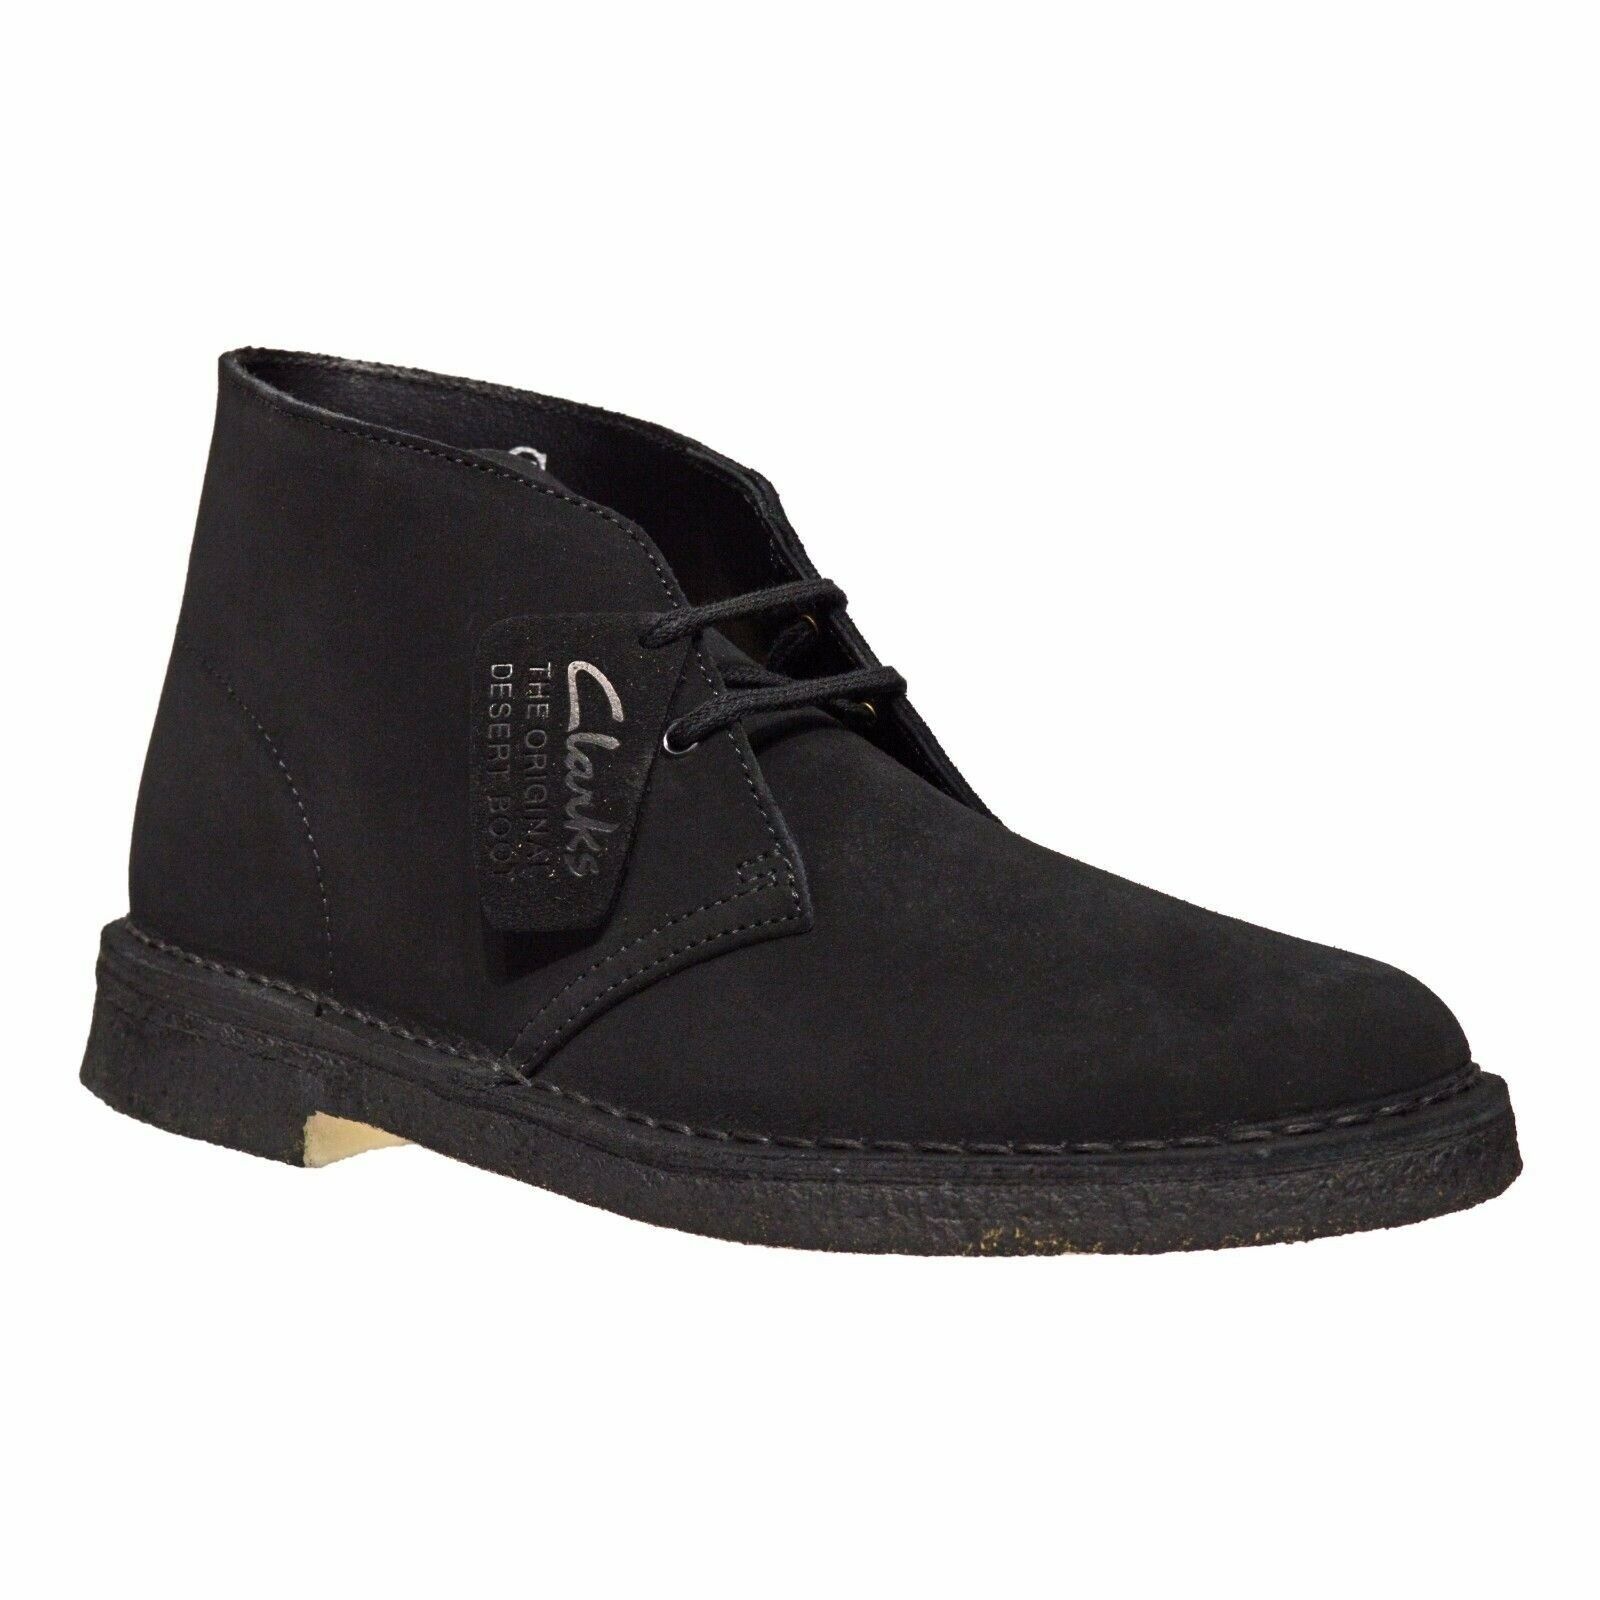 Clarks Originals Desert Boots Men's Black Suede 26138227 - Casual Shoes